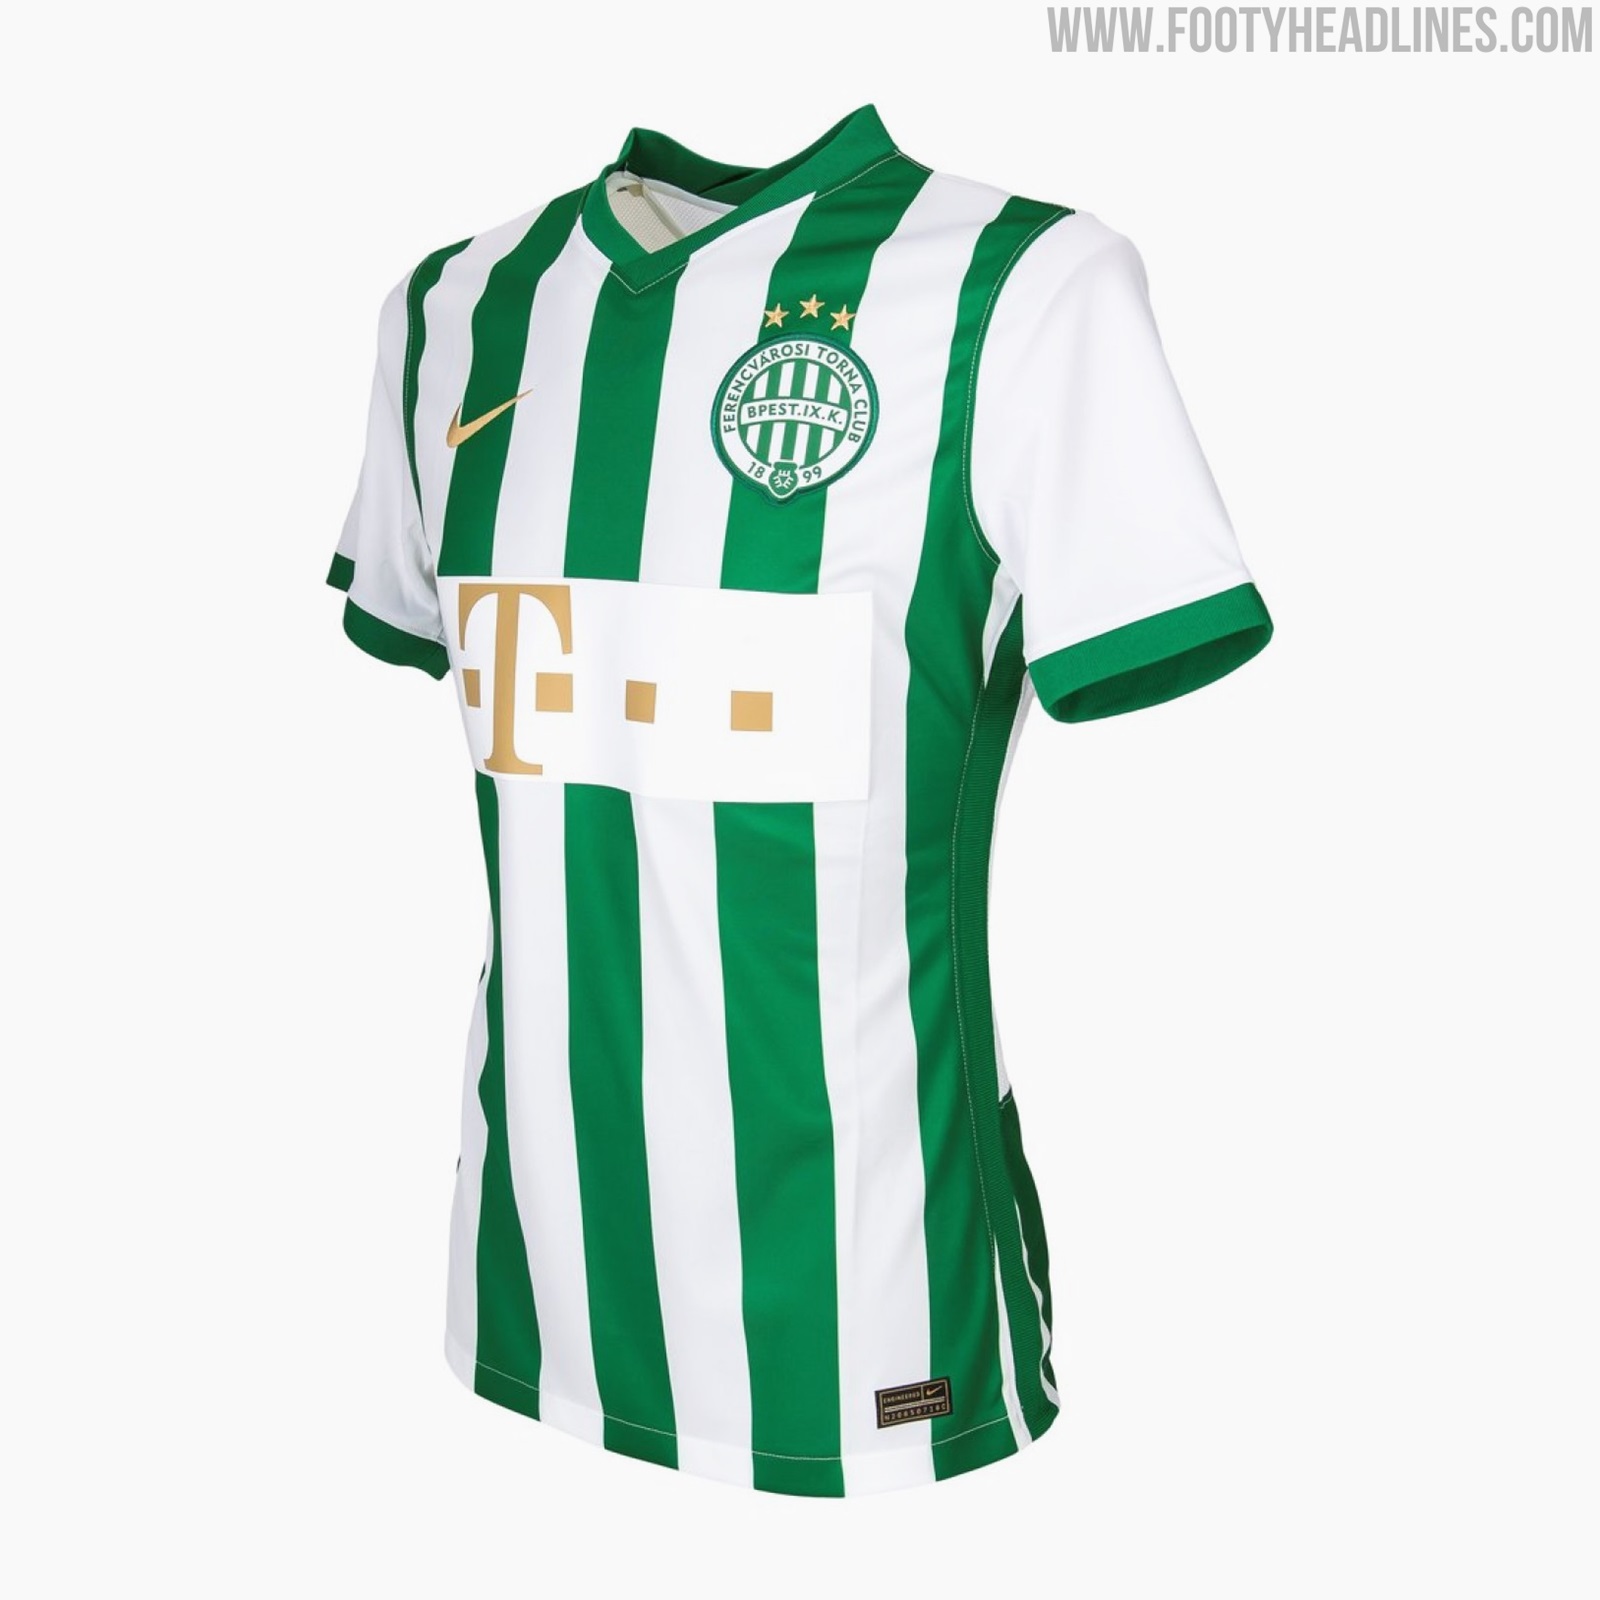 Ferencváros 2020/21 Nike Home and Away Kits - FOOTBALL FASHION